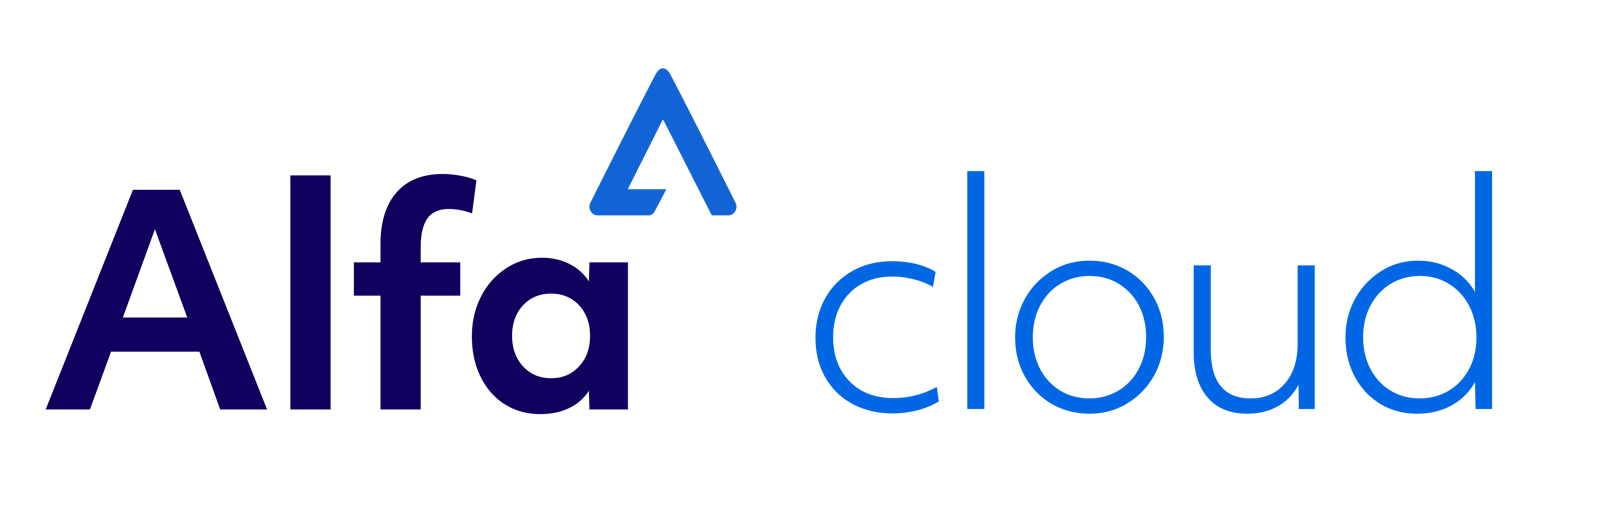 Alfa cloud logo